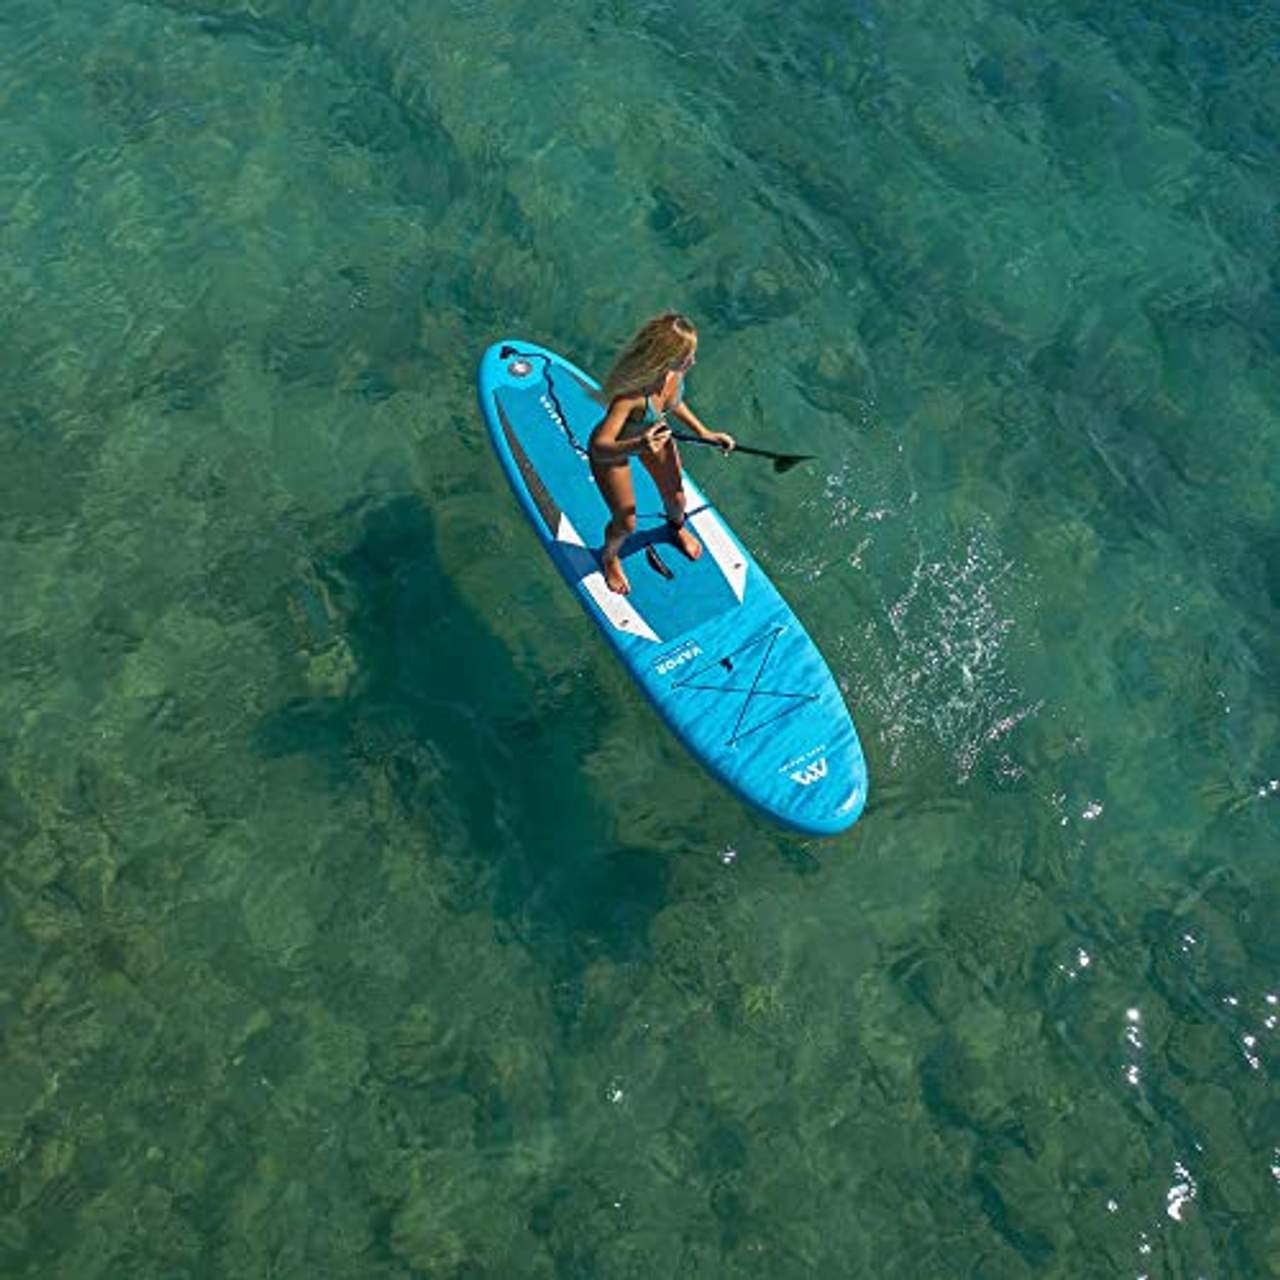 AM AQUA MARINA Stand Up Paddle Board aufblasbar im Set Vapor 2021  